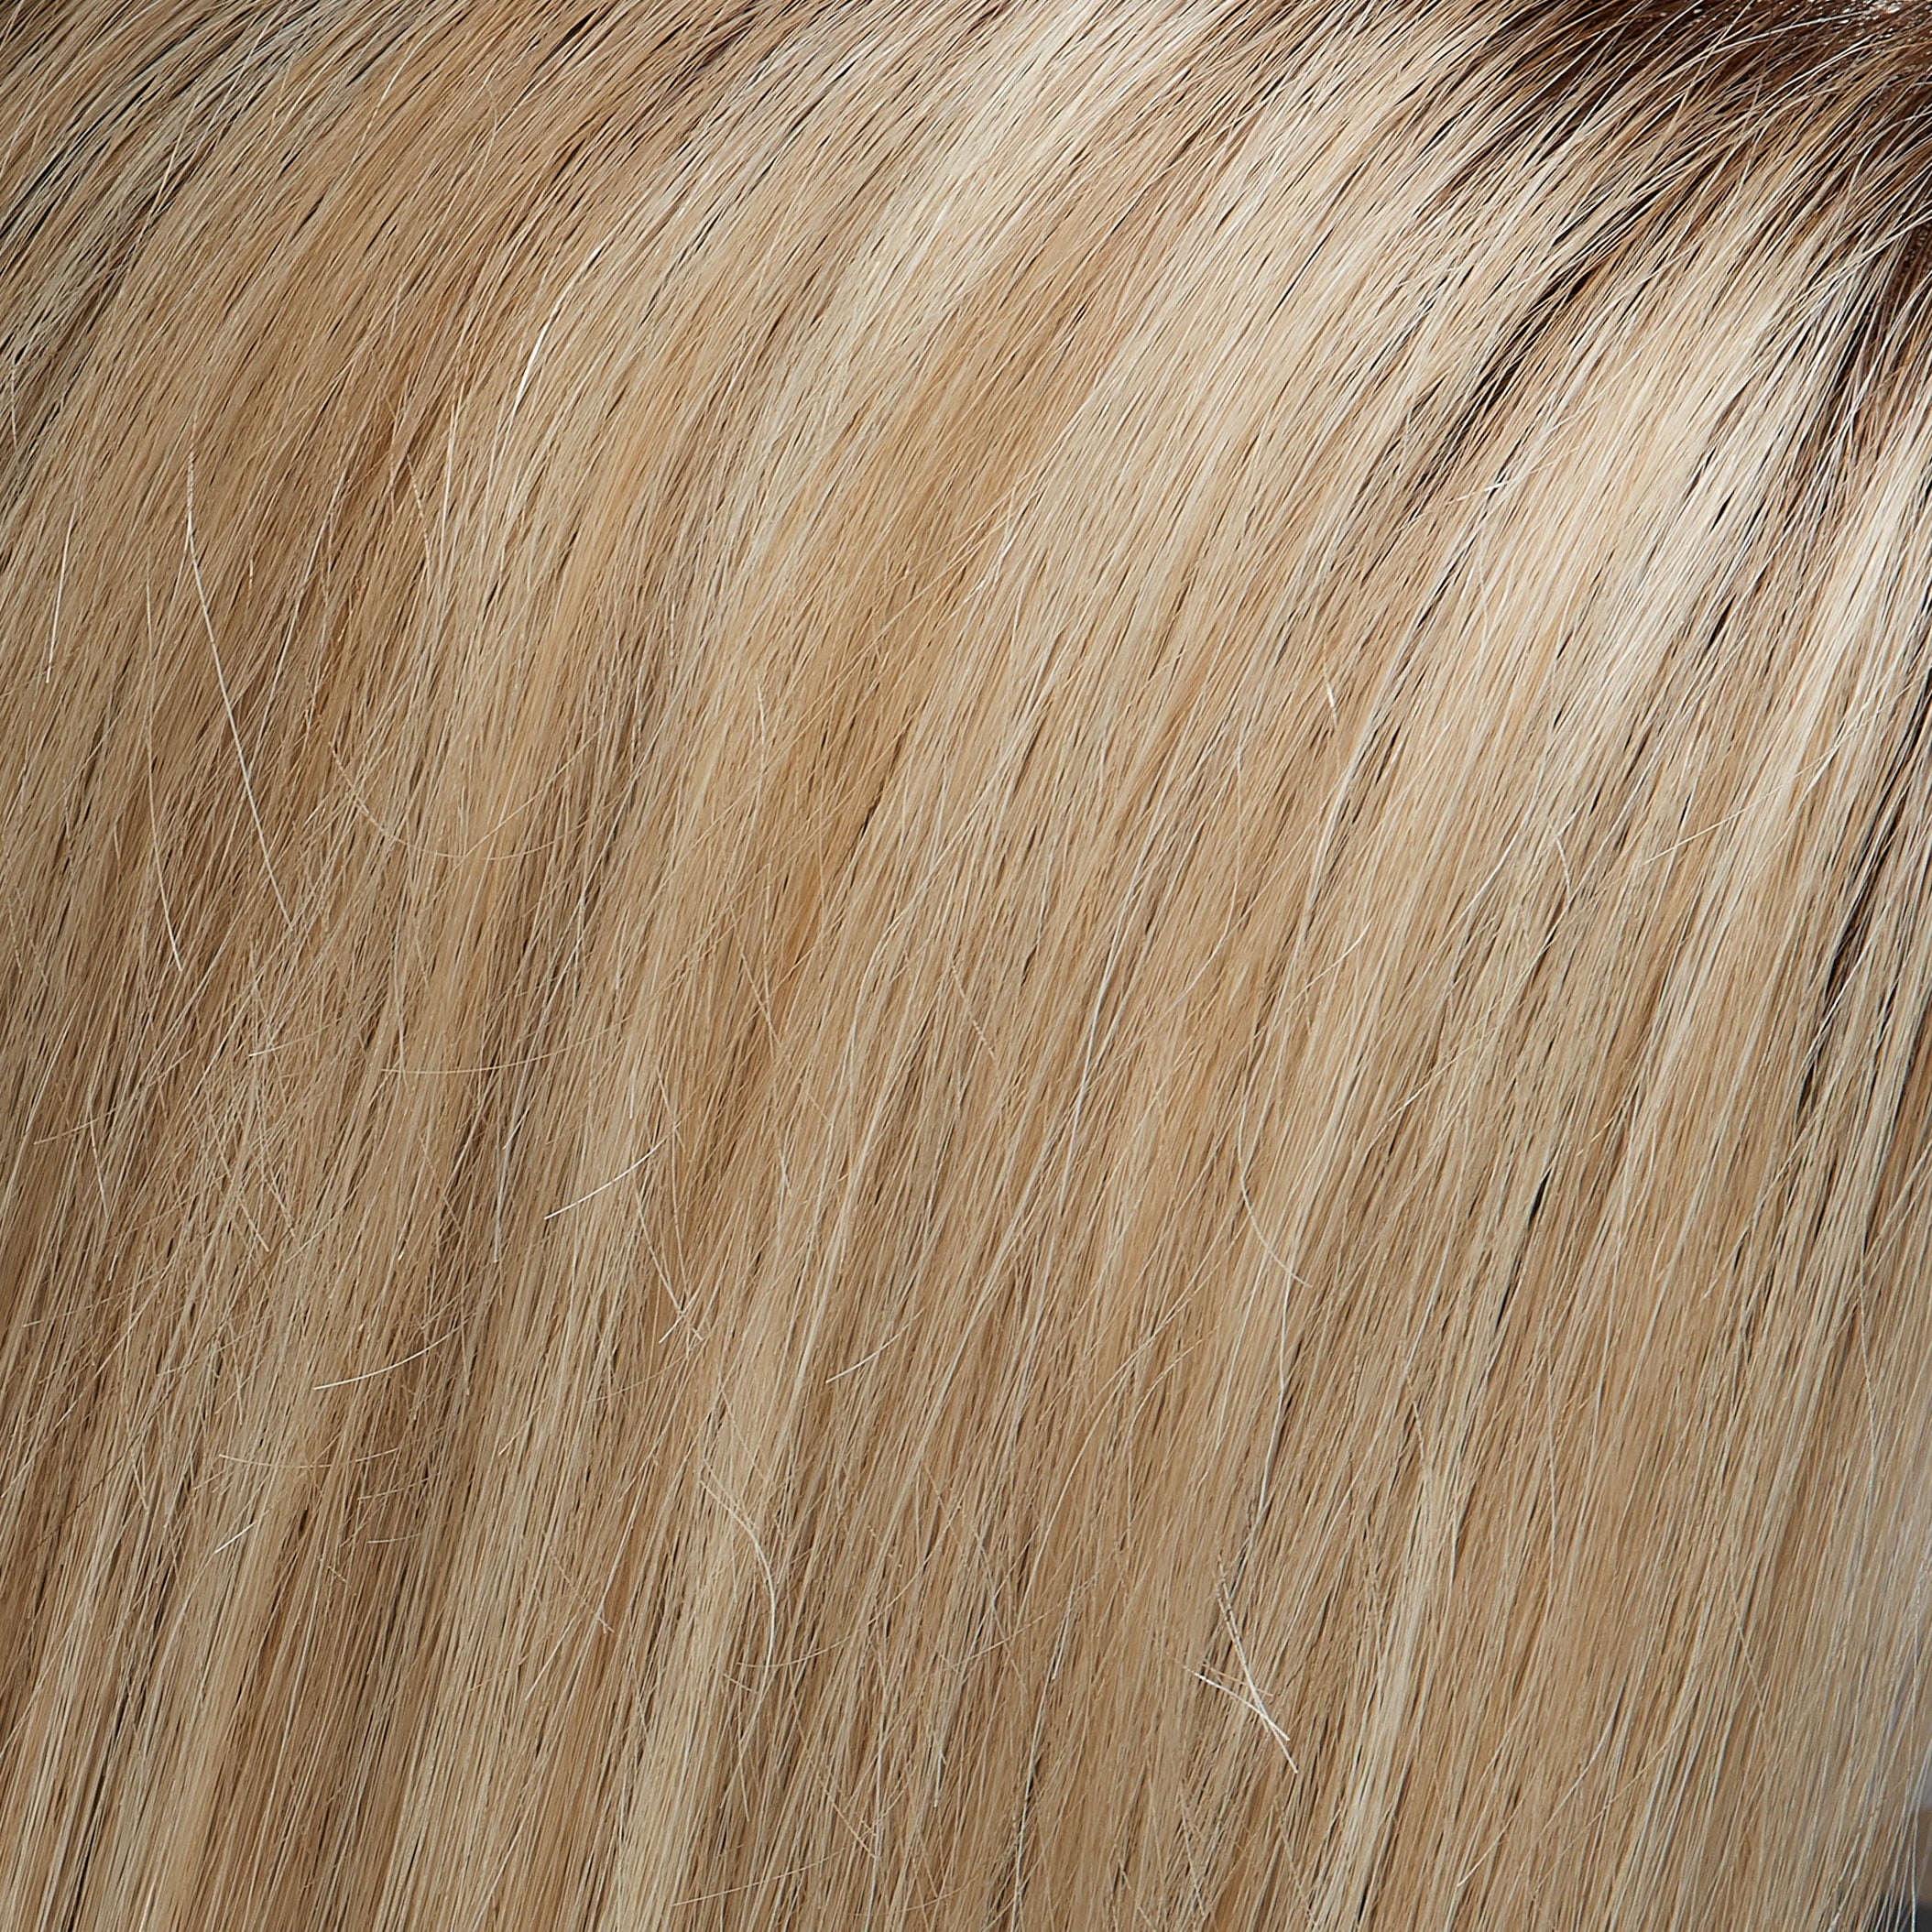 easiPart 12” human hair topper - Jon Renau